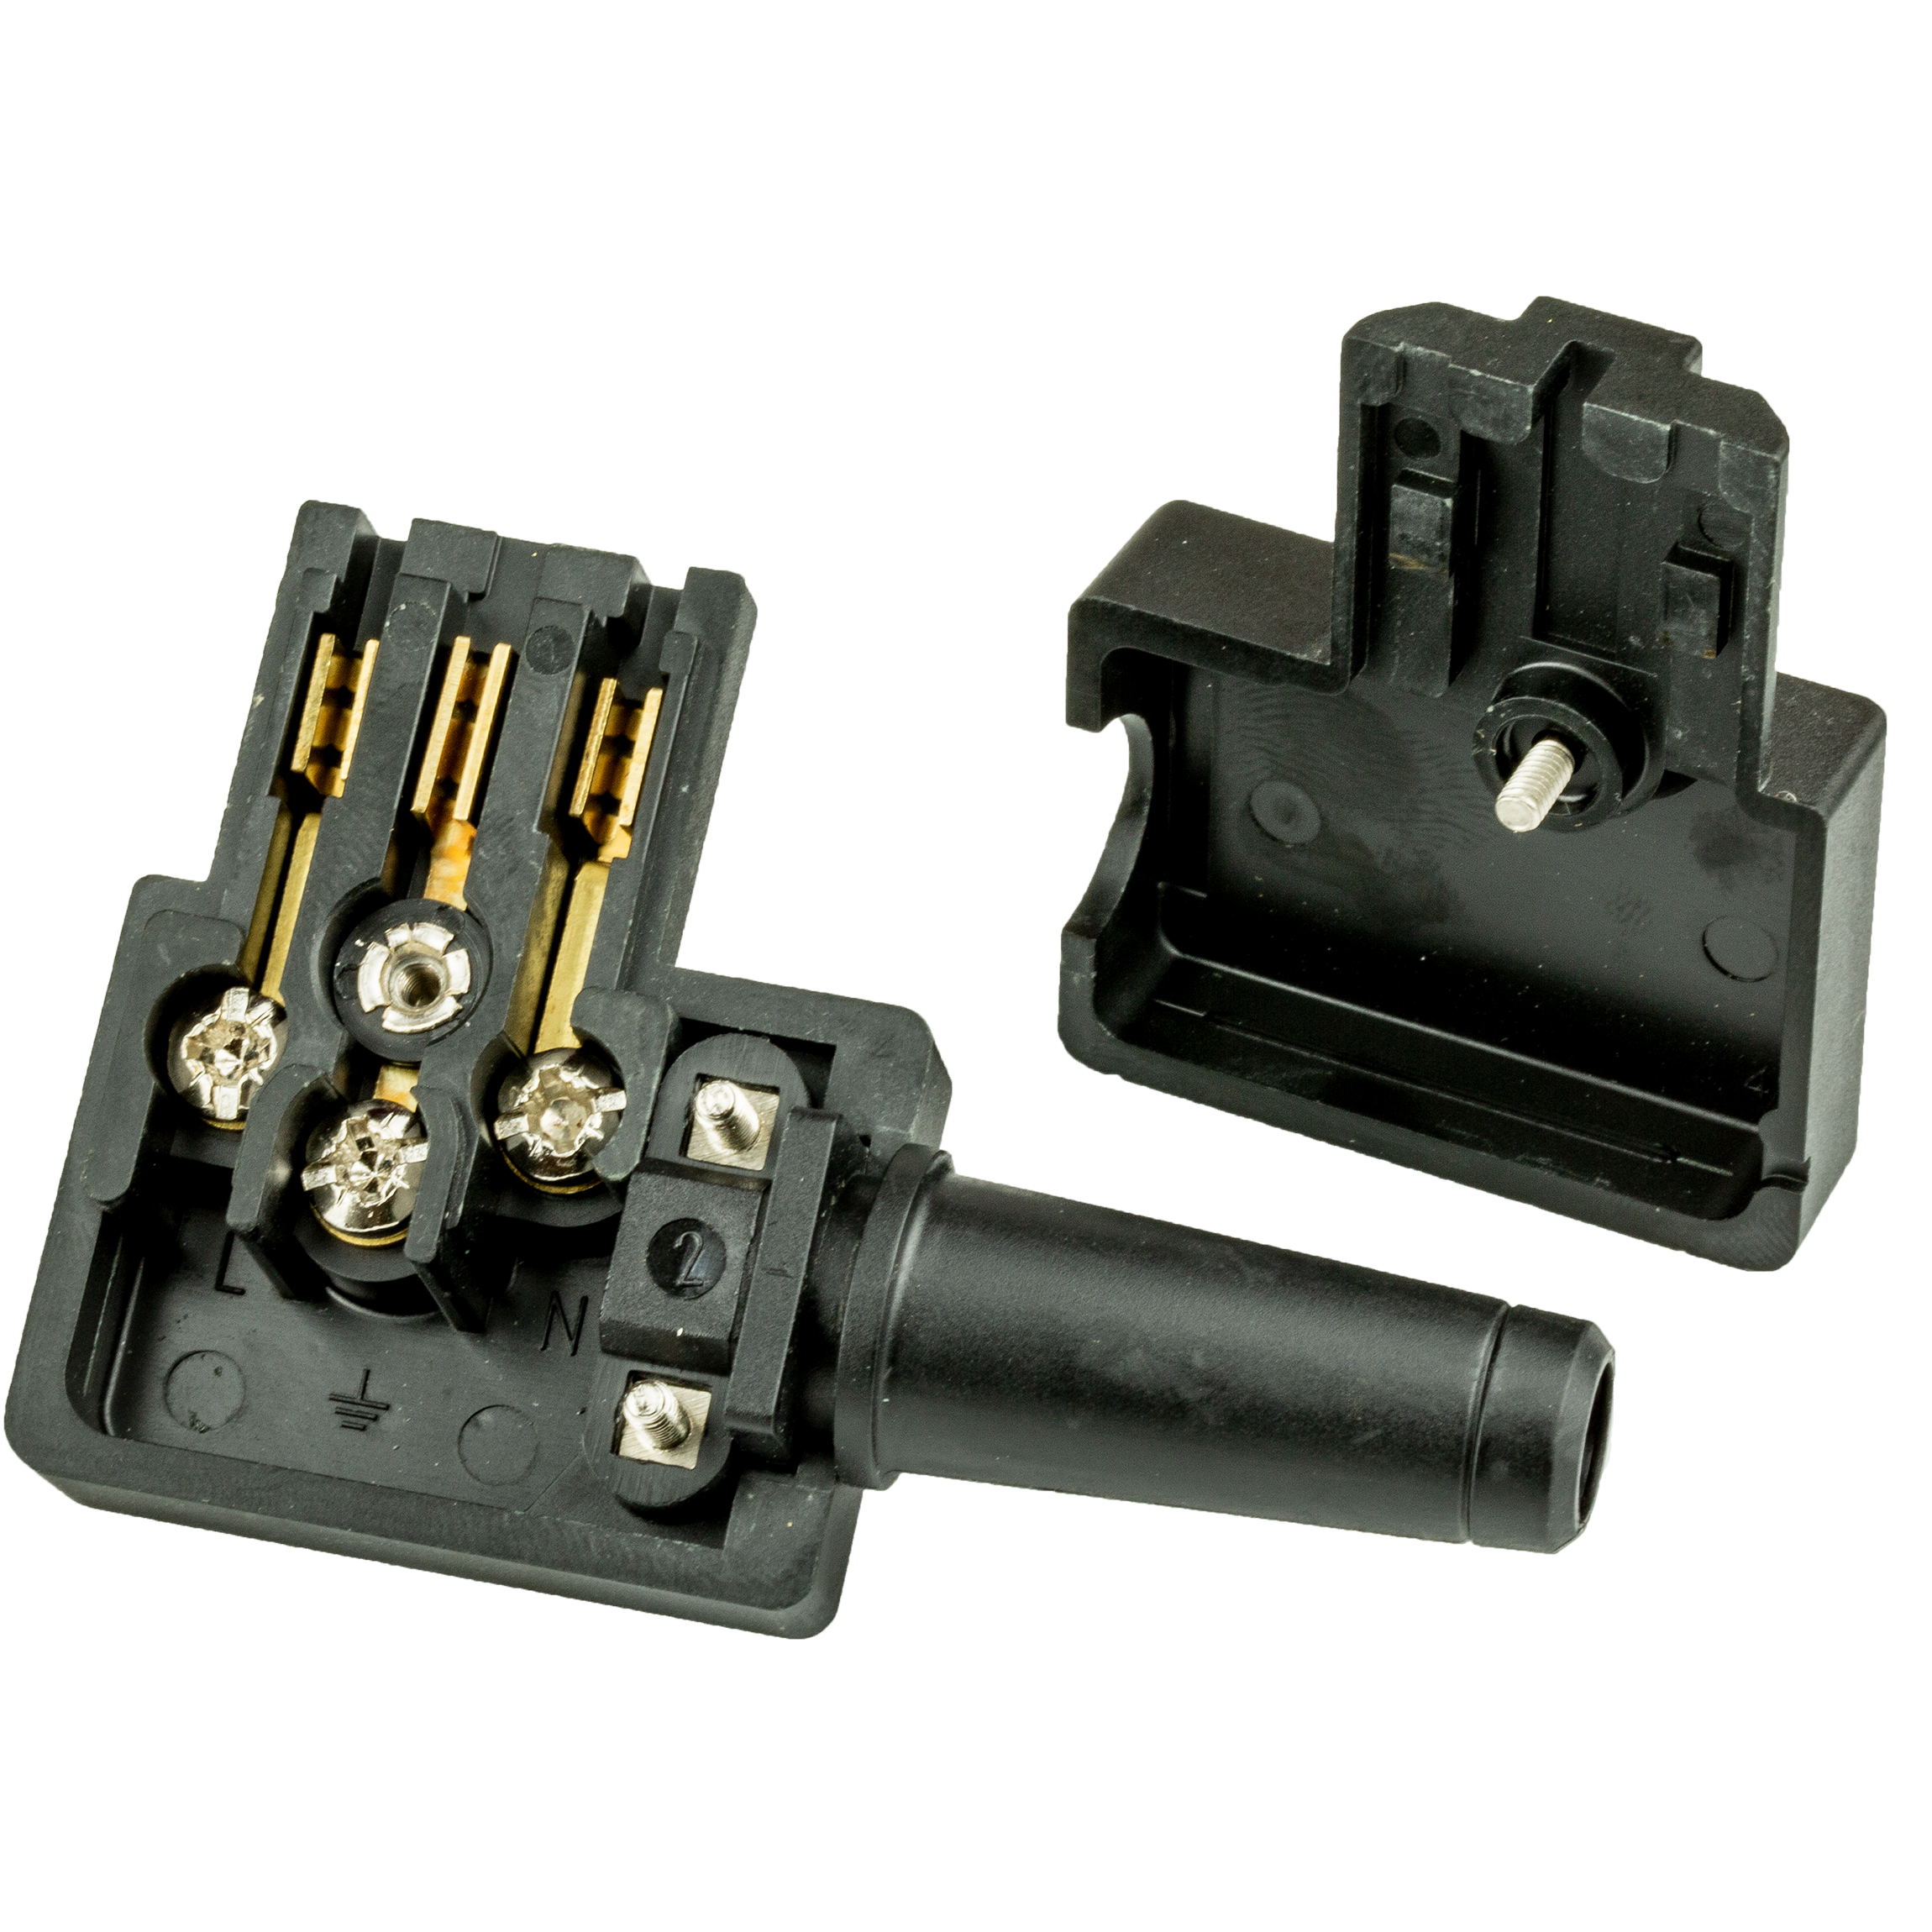 Rewireable C13 Connector